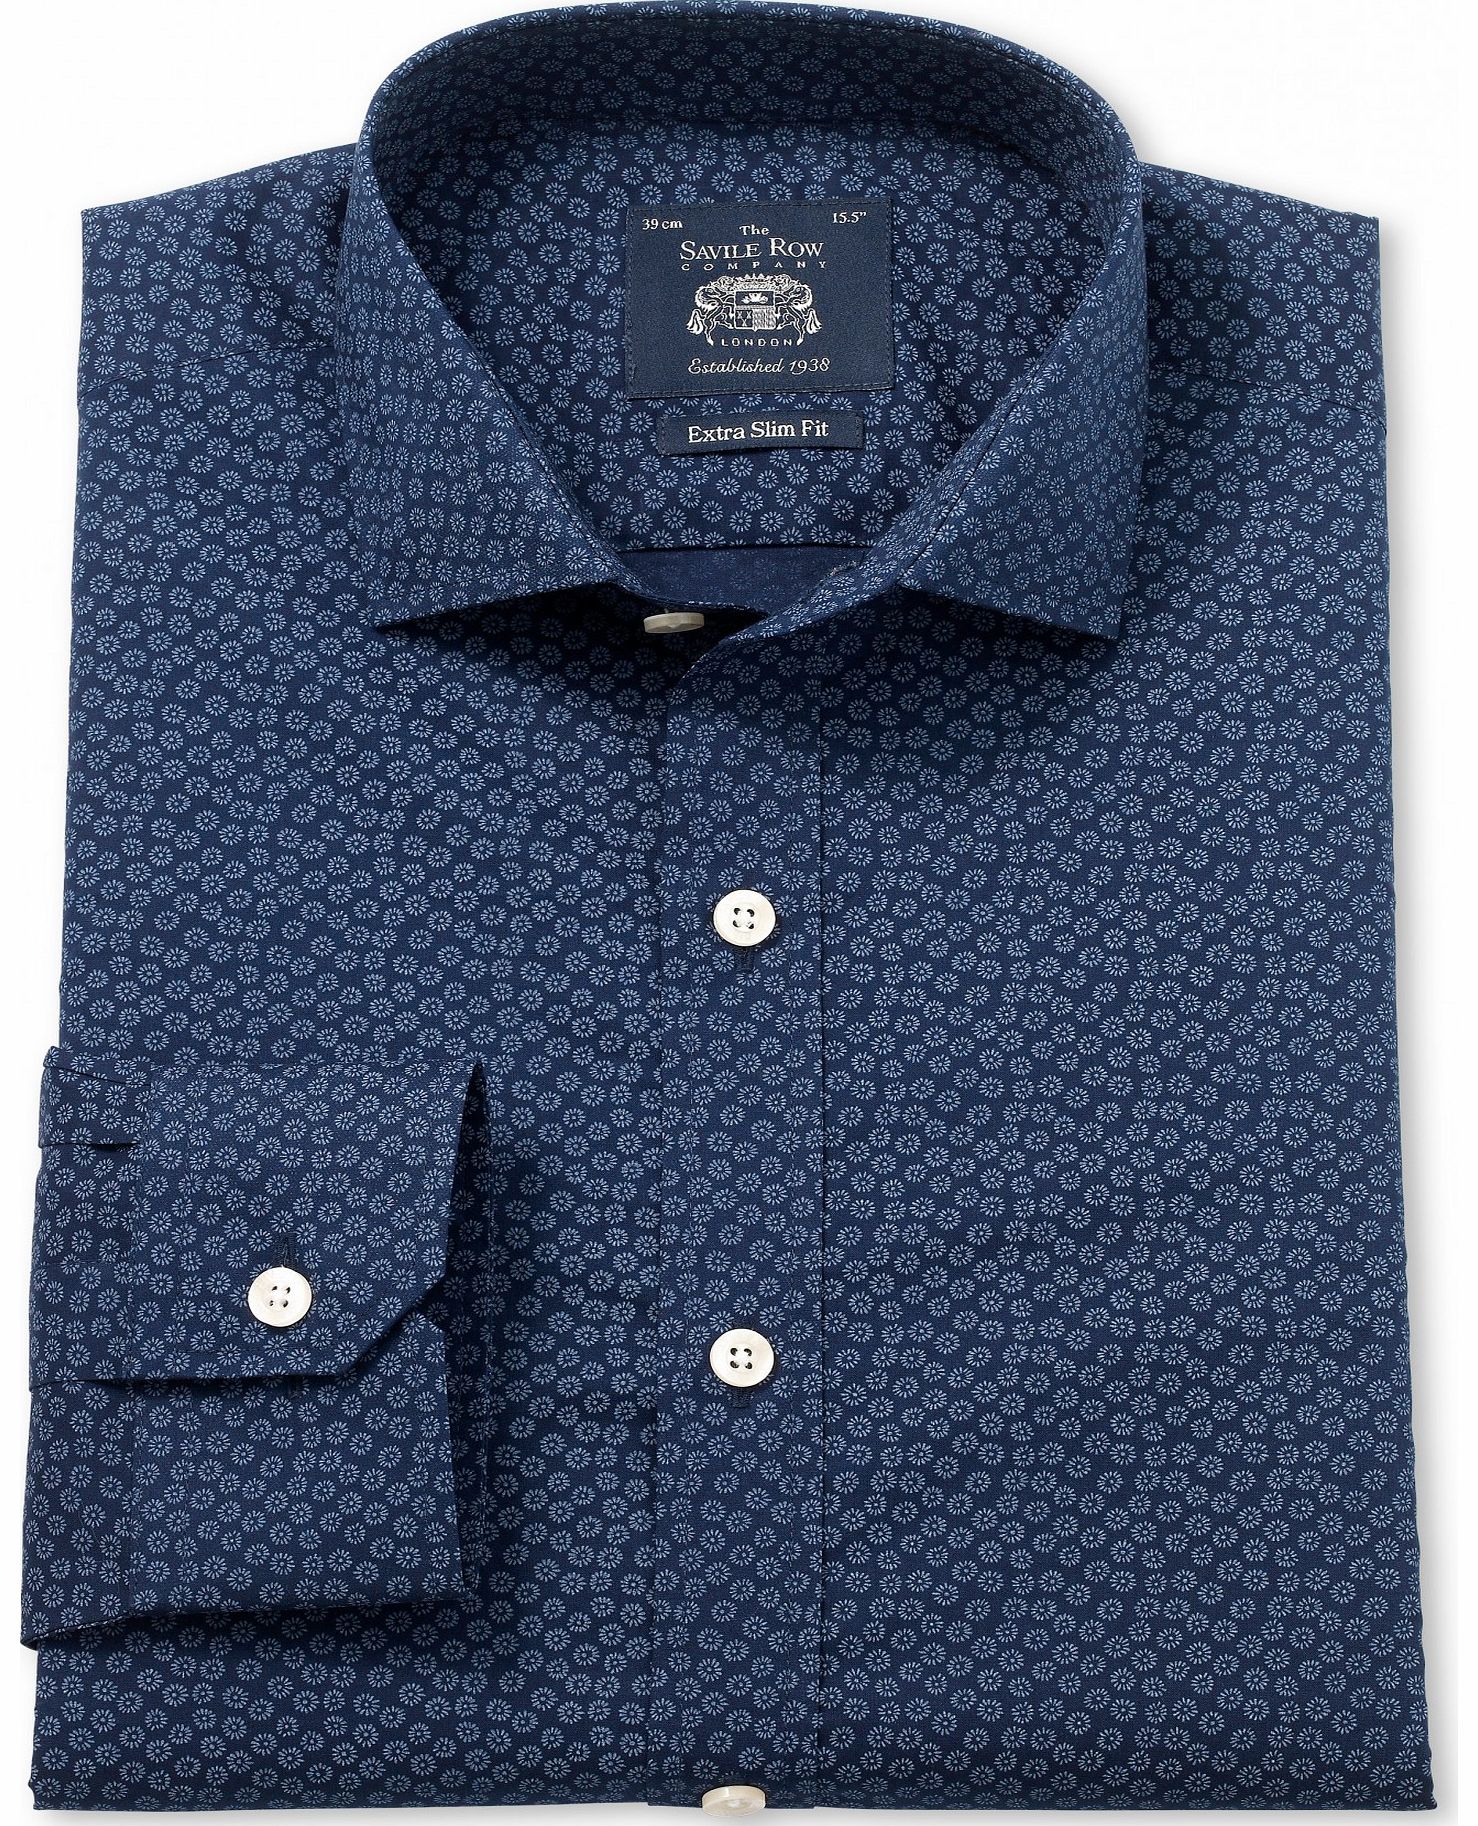 Savile Row Company Navy Blue Printed Extra Slim Fit Shirt 15 1/2``